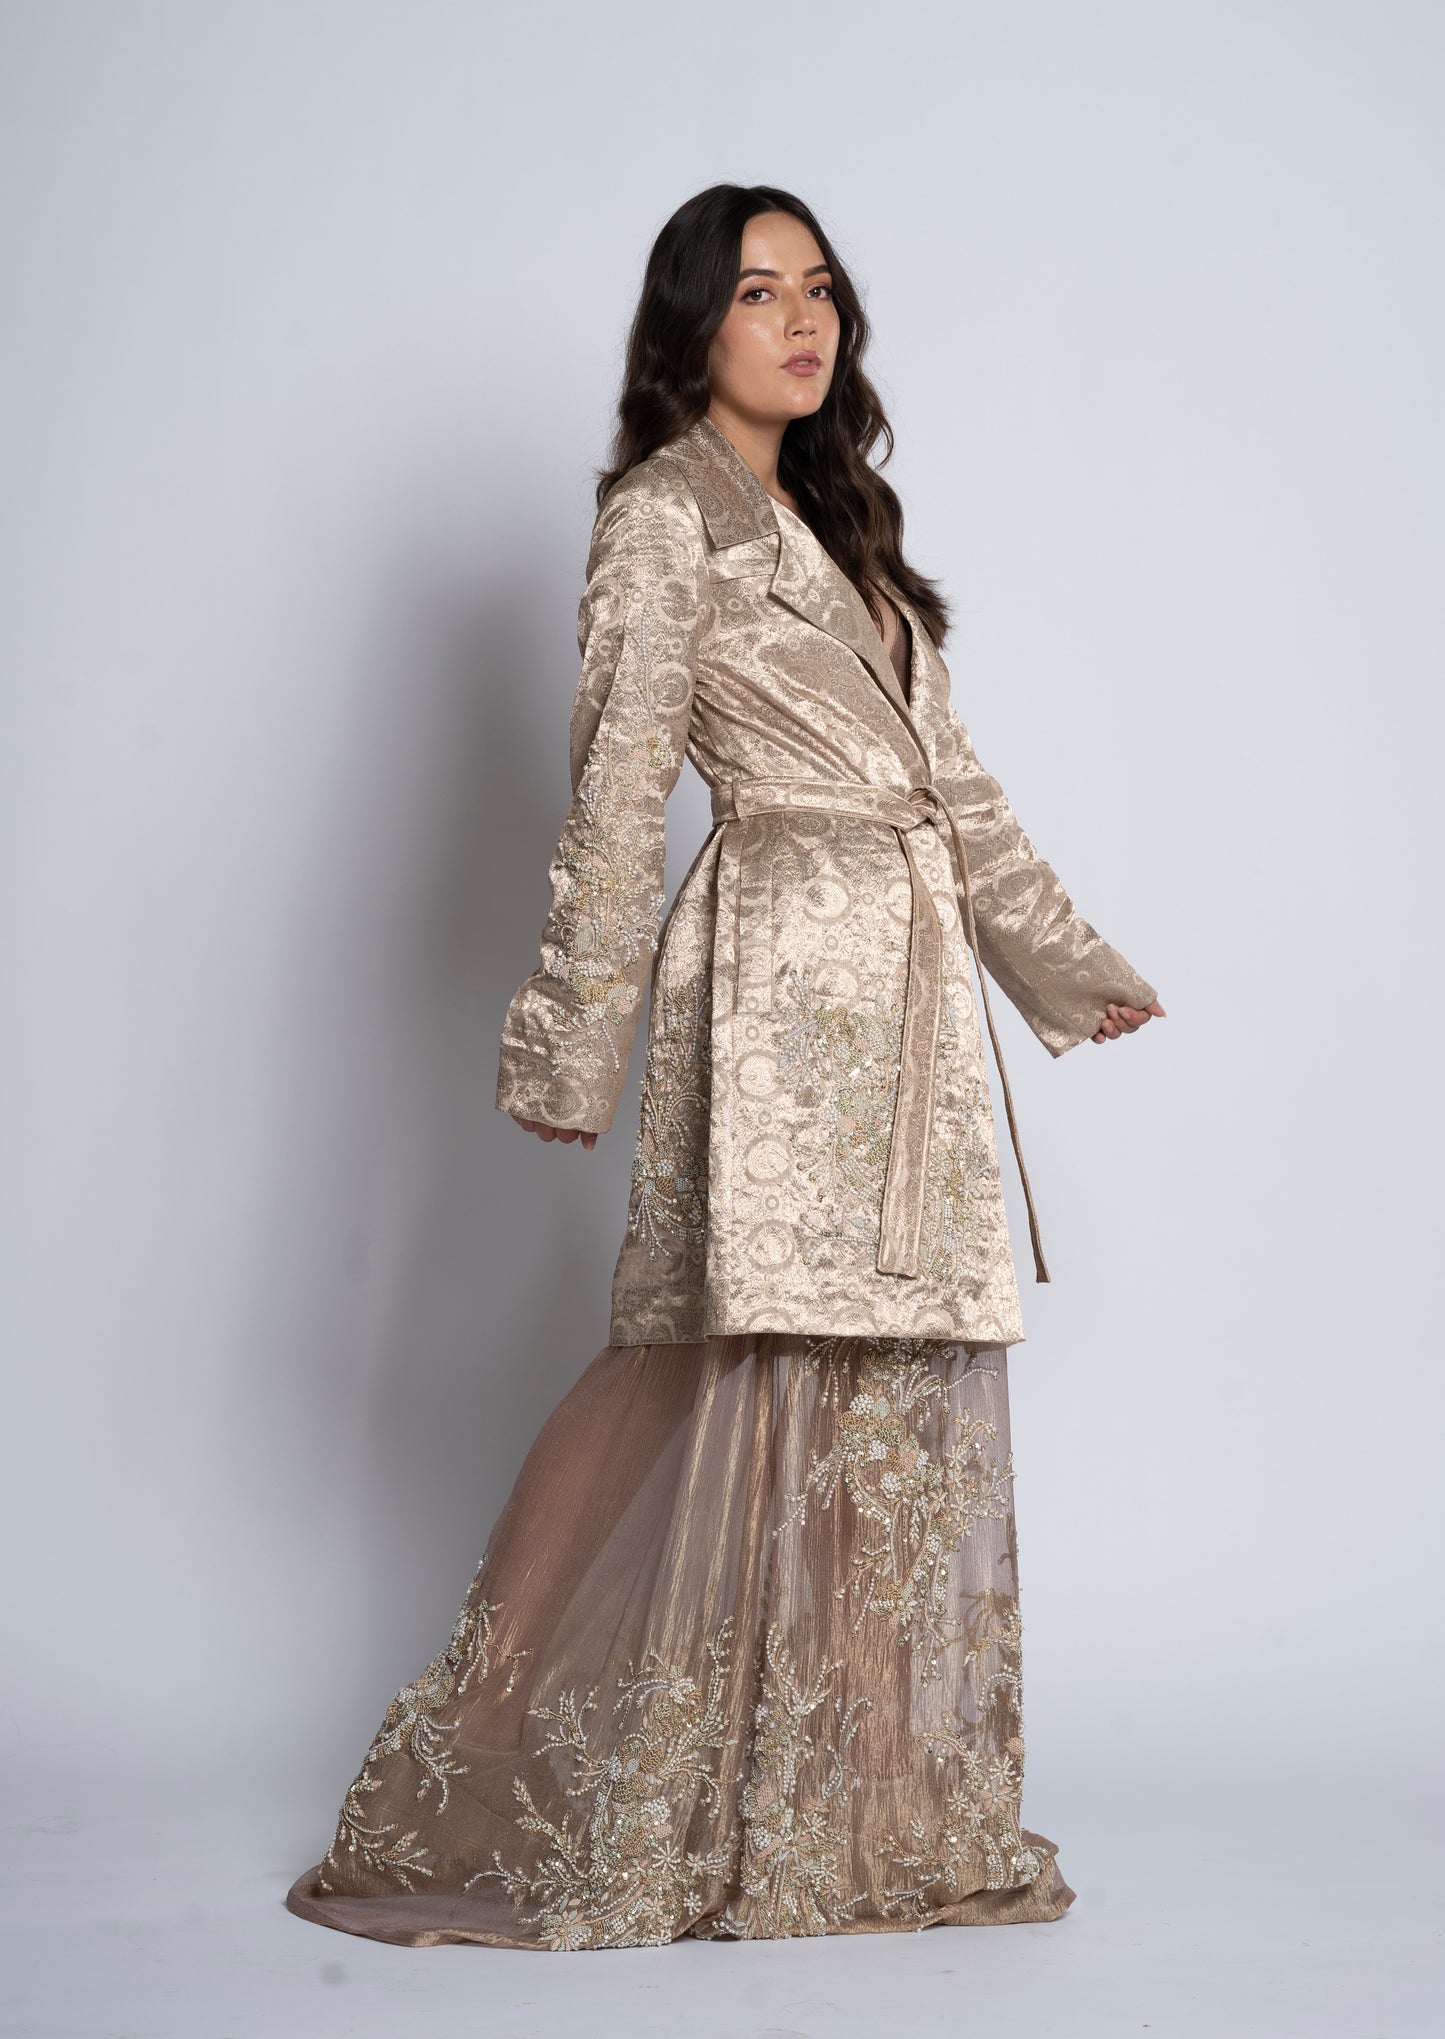 A Metallic crush flowy dress (GS2048)